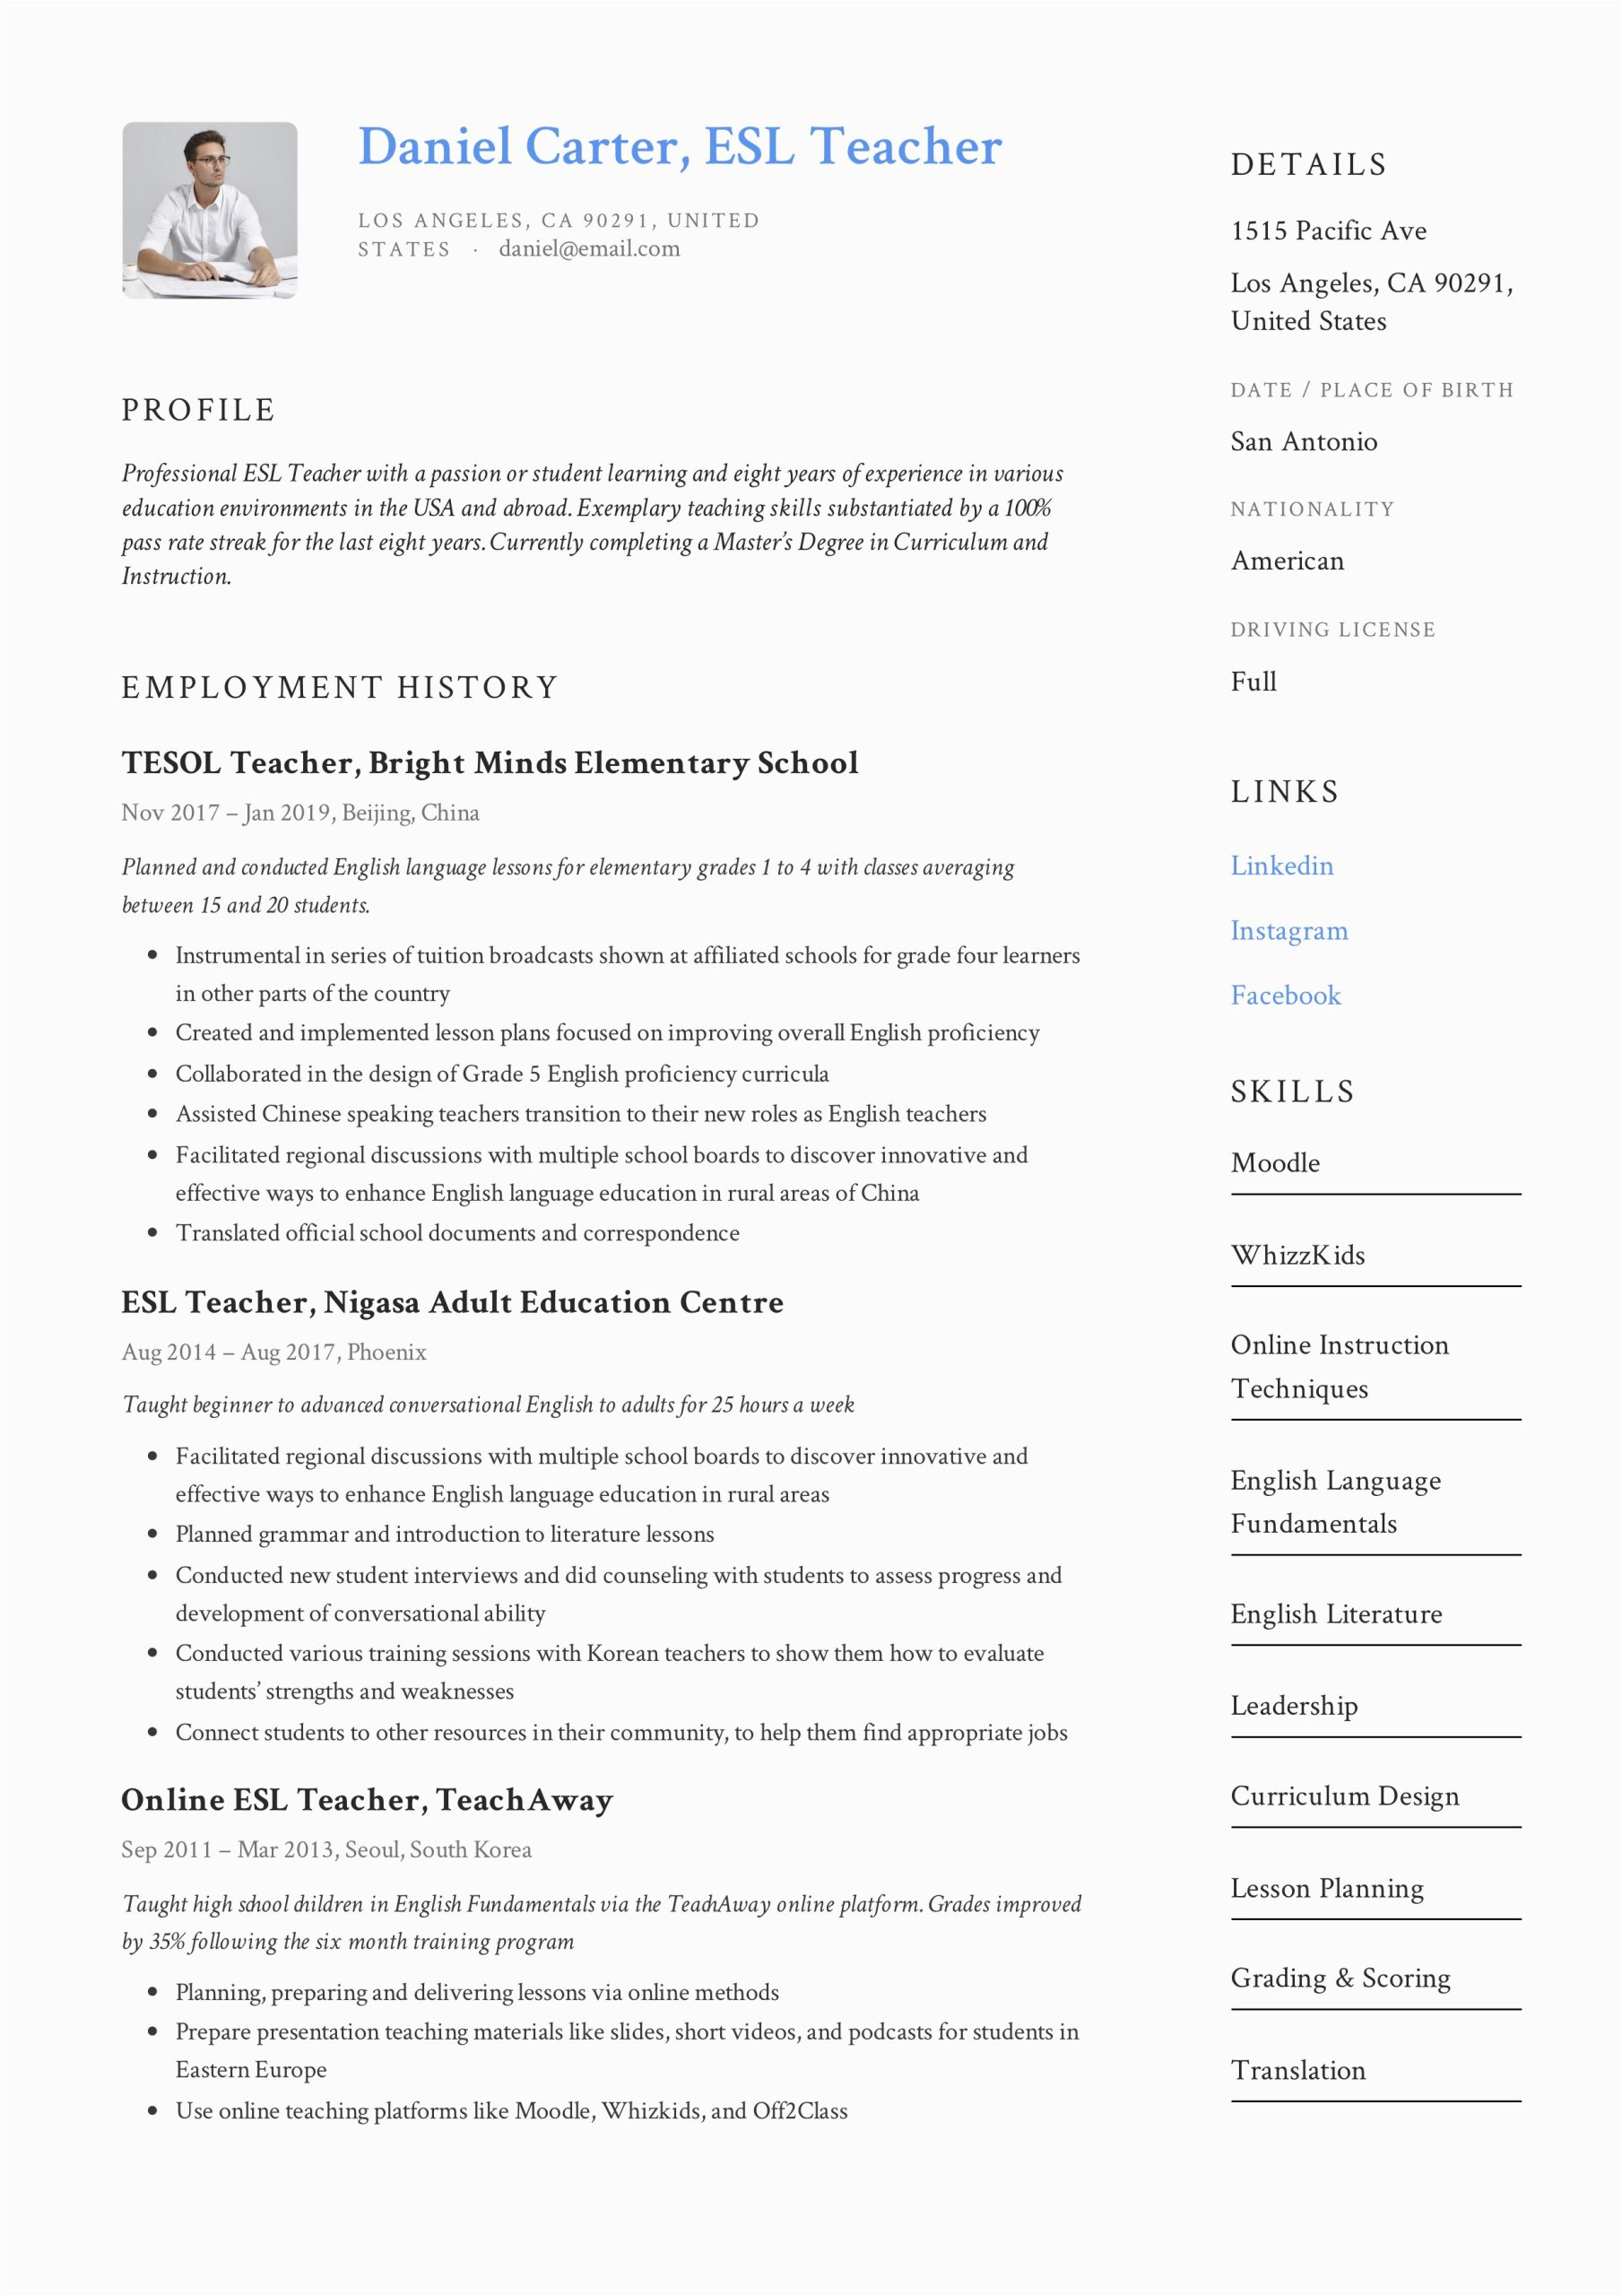 Sample Resume for English Teacher with Experience Esl Teacher Resume Sample & Writing Guide